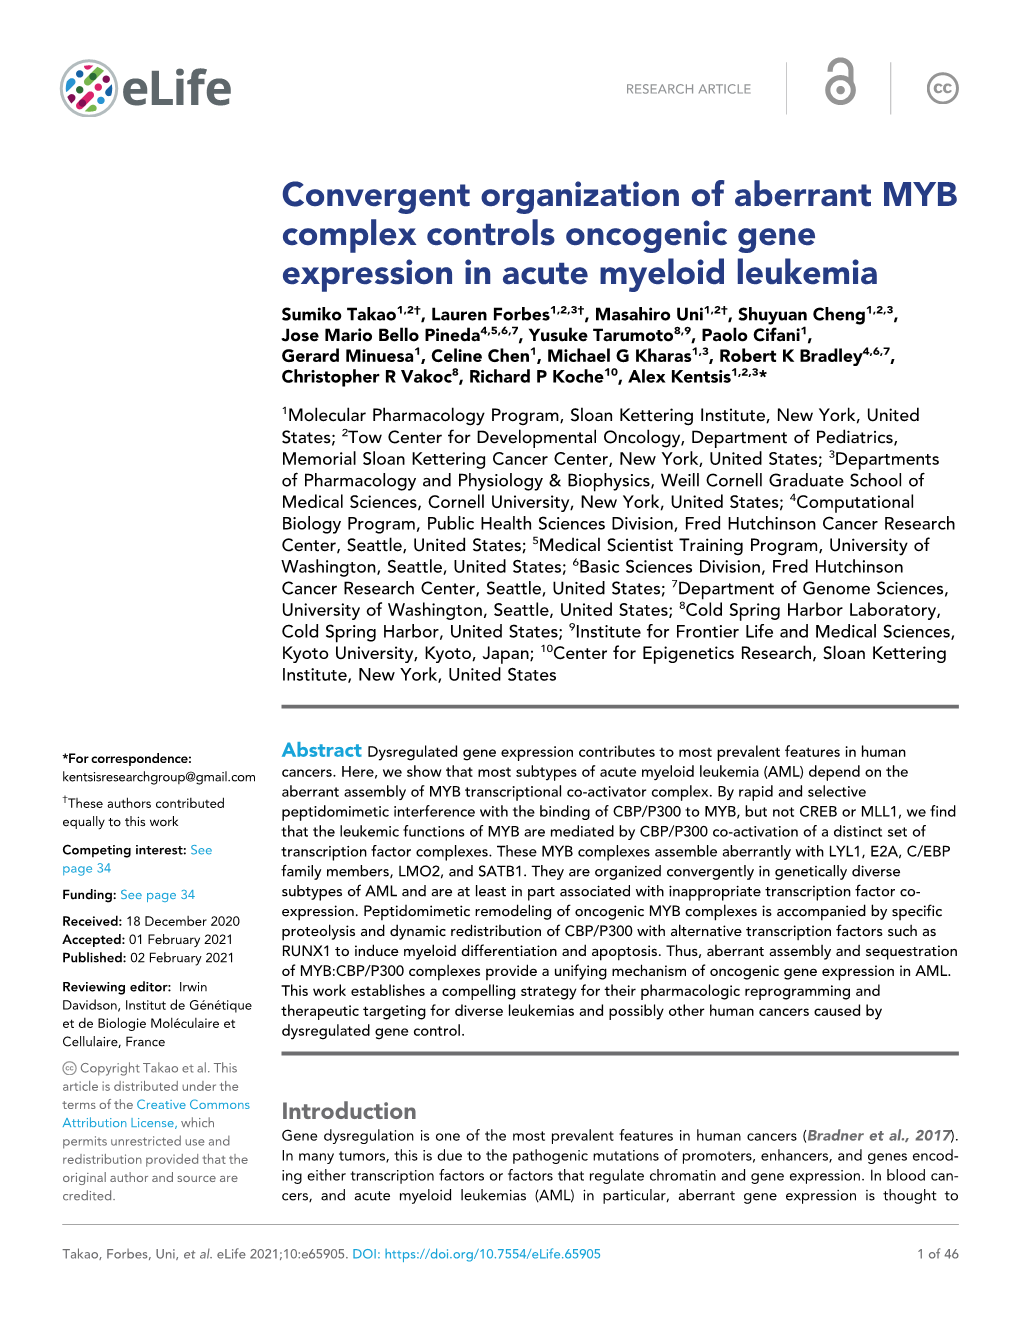 Convergent Organization of Aberrant MYB Complex Controls Oncogenic Gene Expression in Acute Myeloid Leukemia